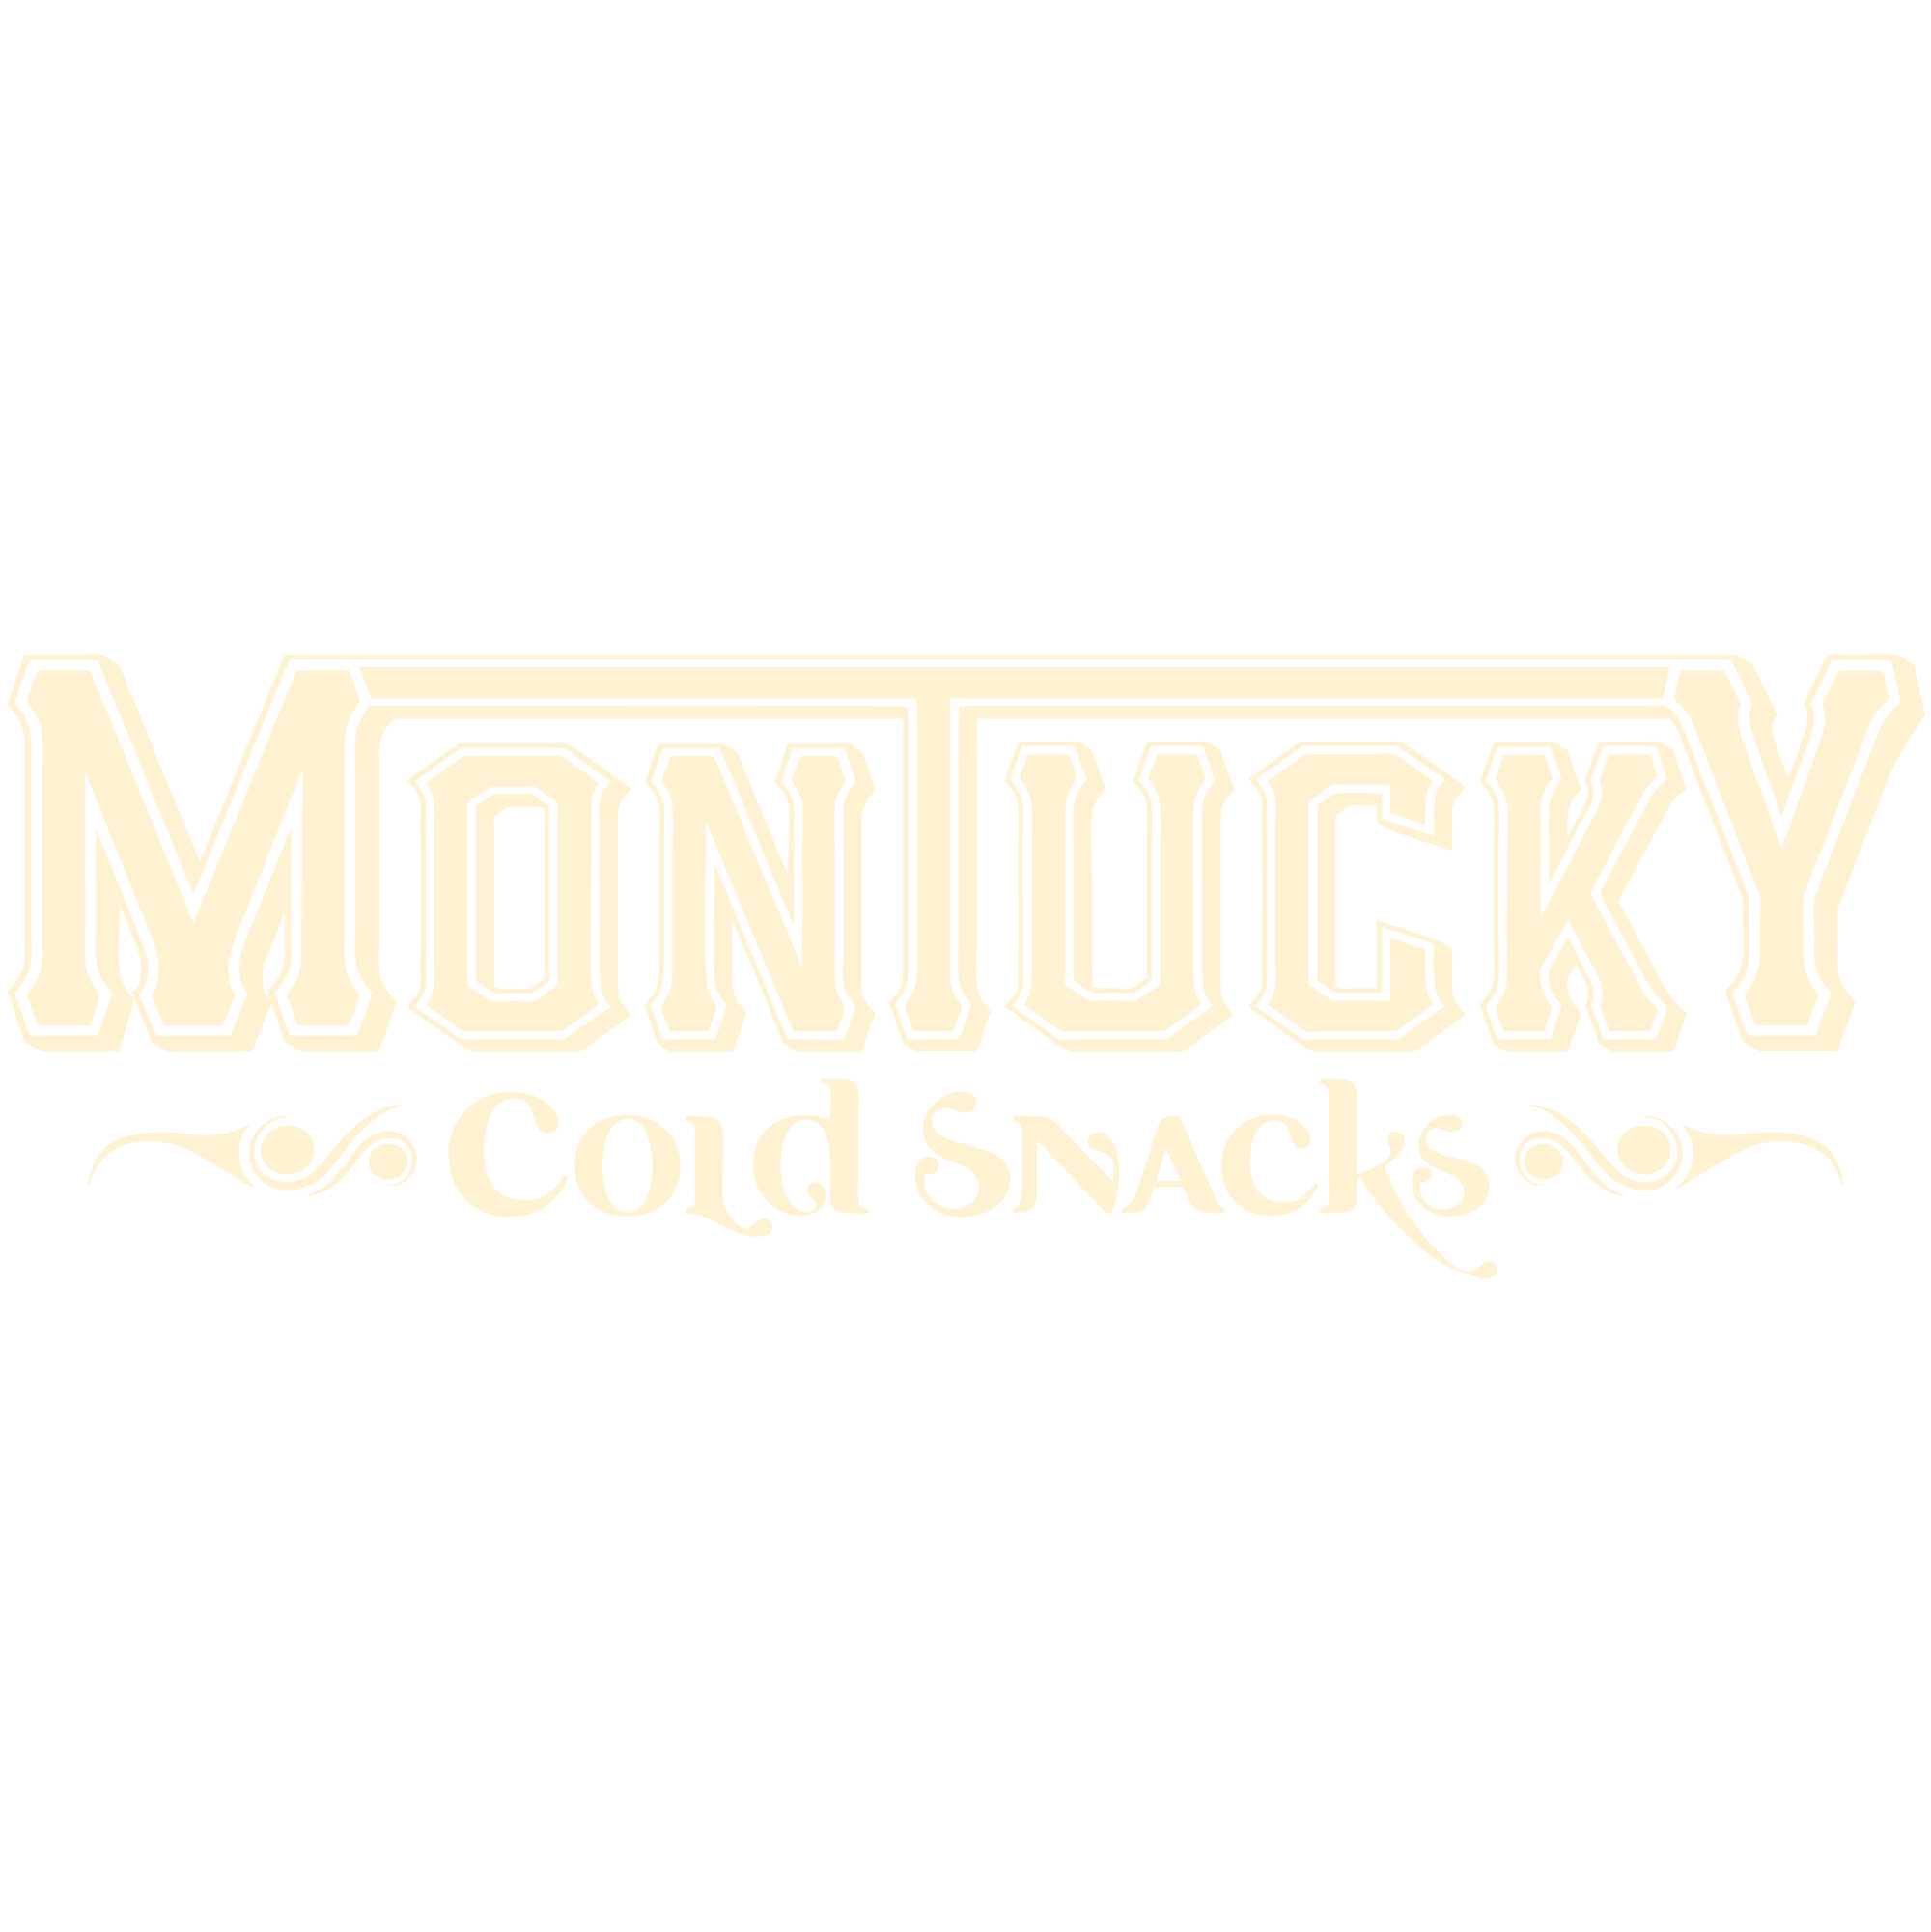 Moontuckey logo tan